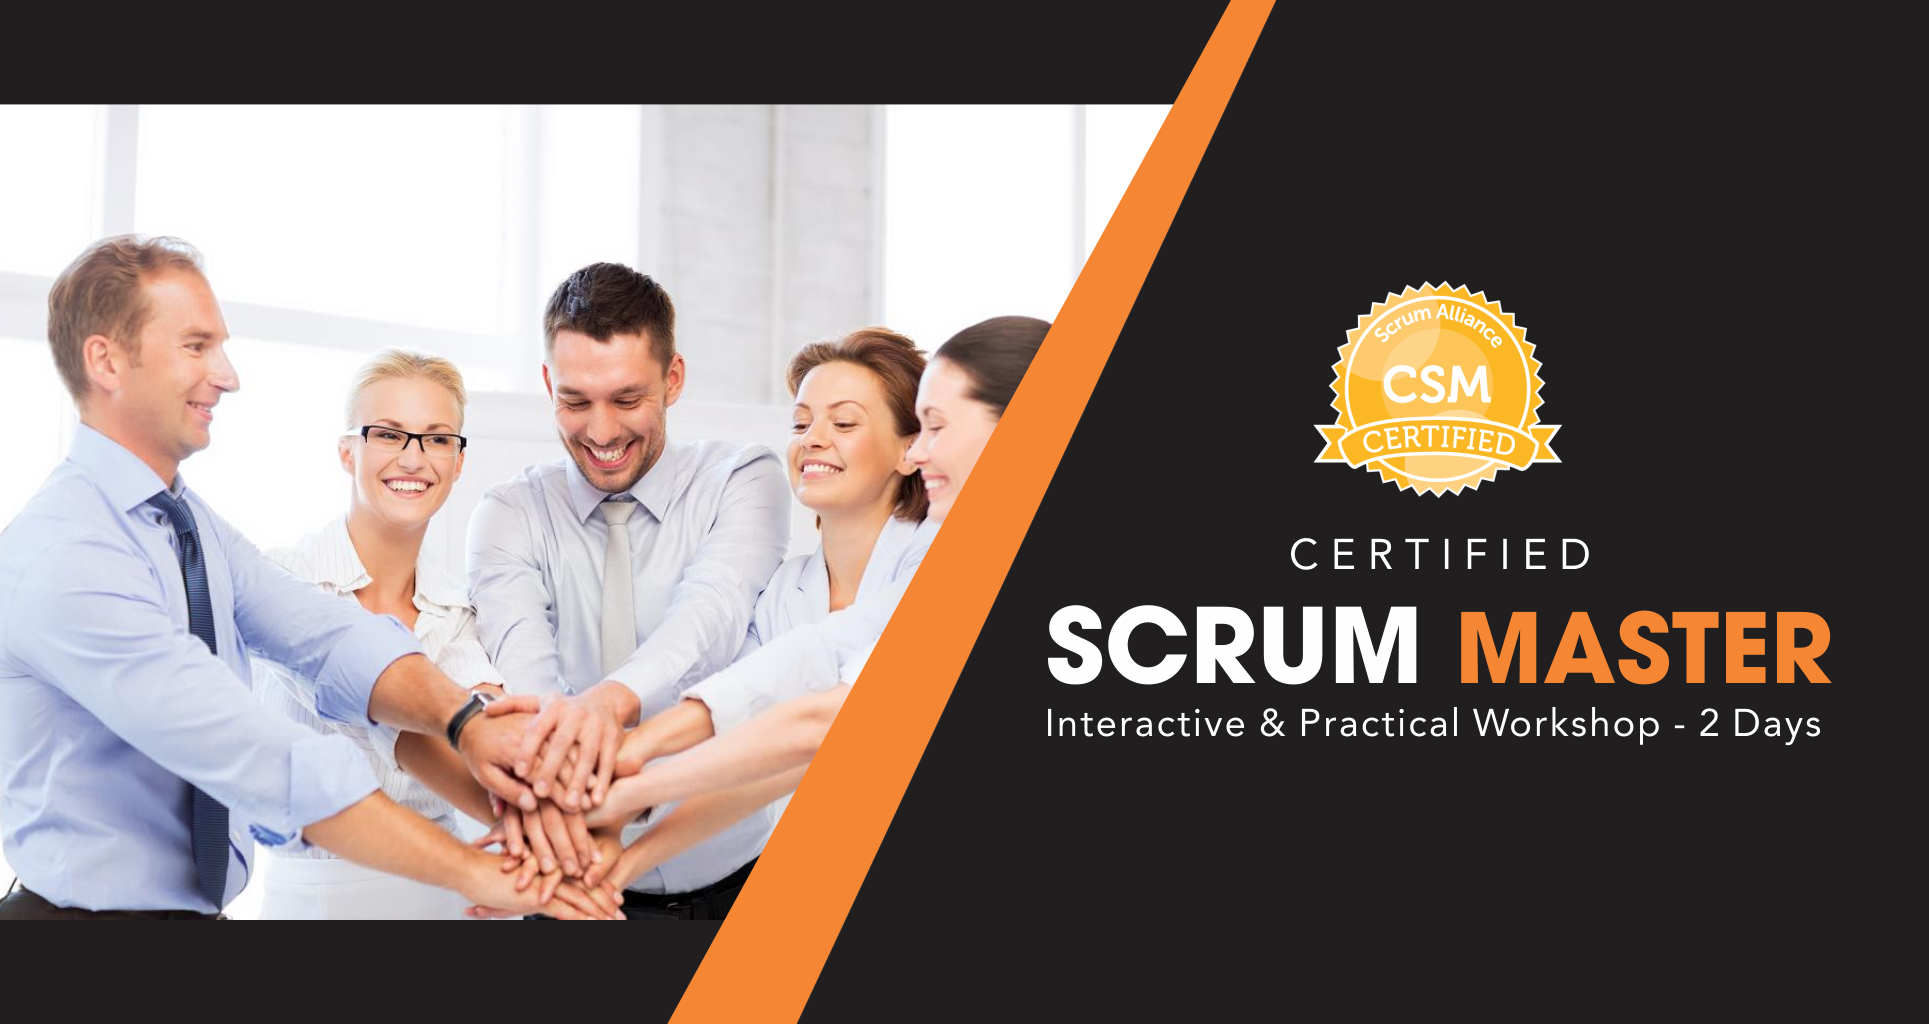 CSM (Certified Scrum Master) certification Training In Dallas, TX